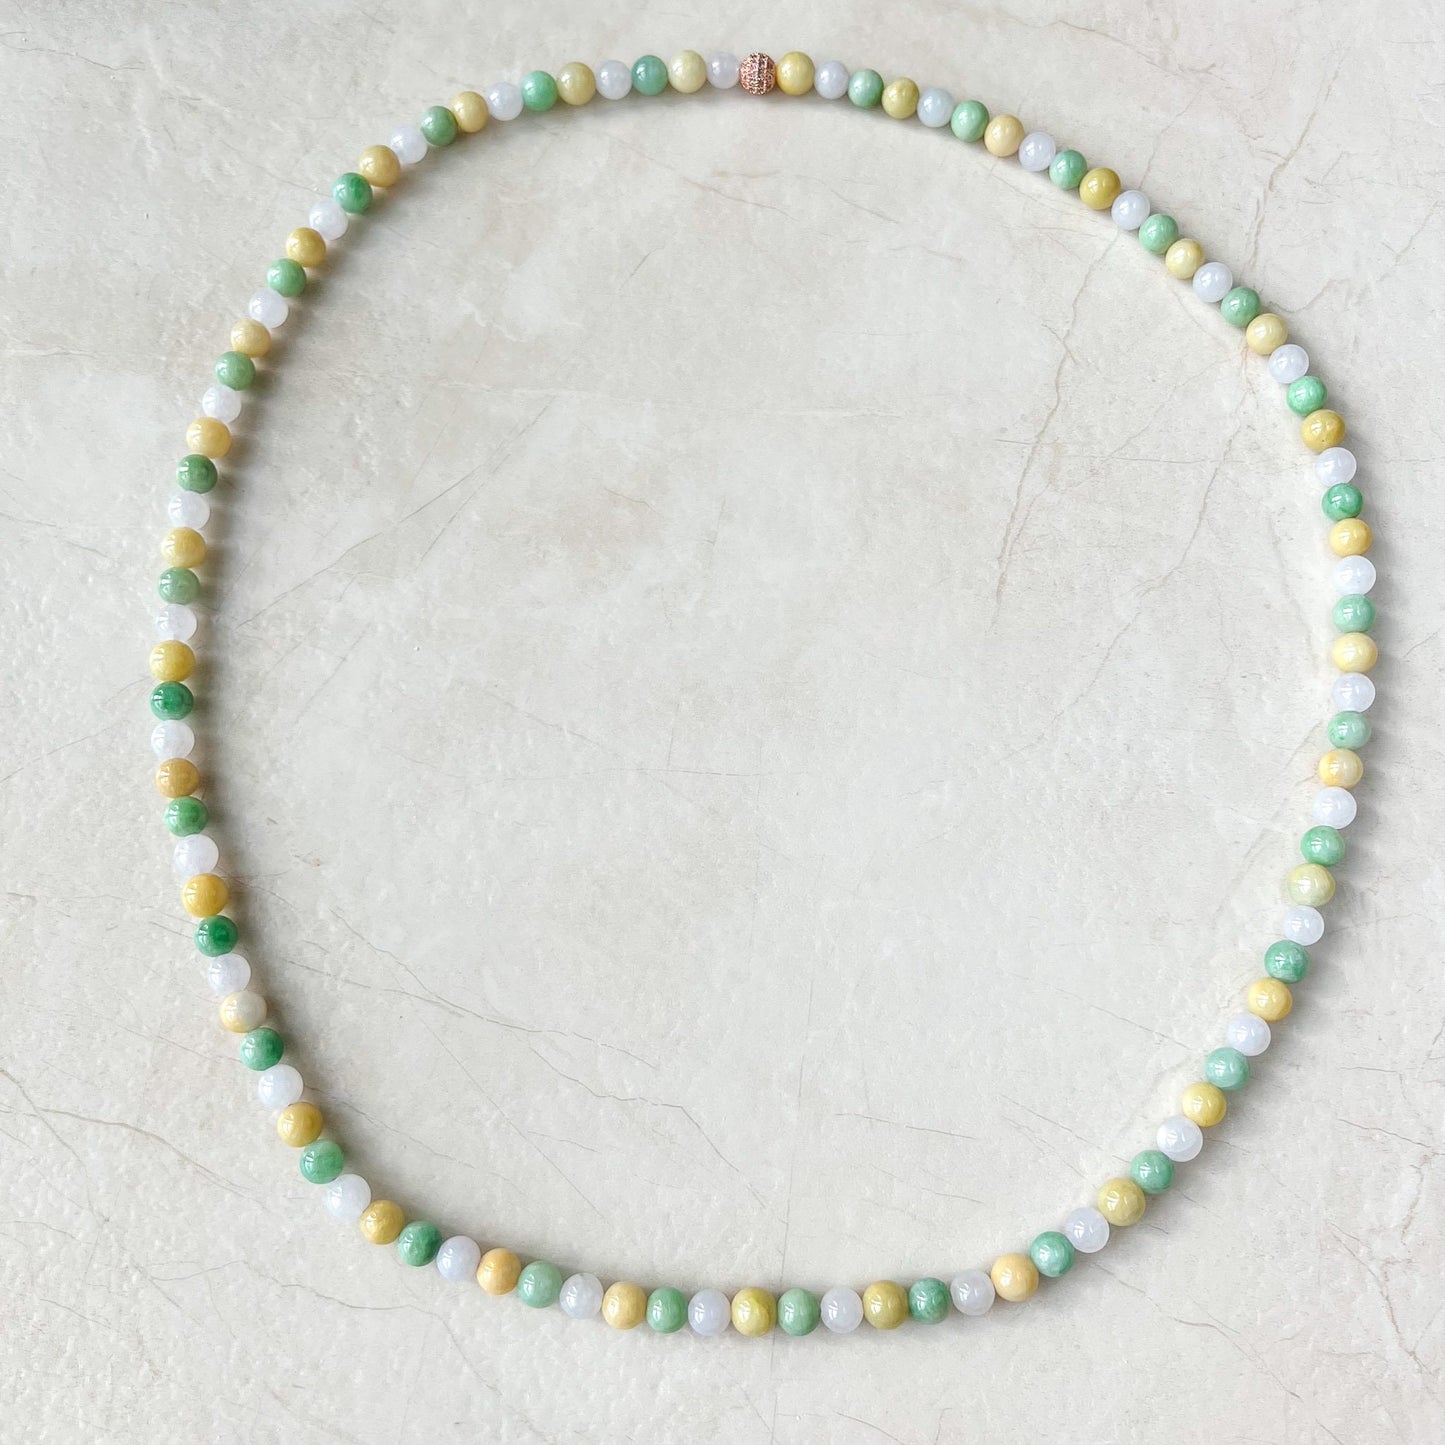 7.75 mm Jadeite Jade Wrapped Bead Bracelet/Necklace, Multi Color Green Yellow White Light Purple Jade, XNZ-0822-1673672515